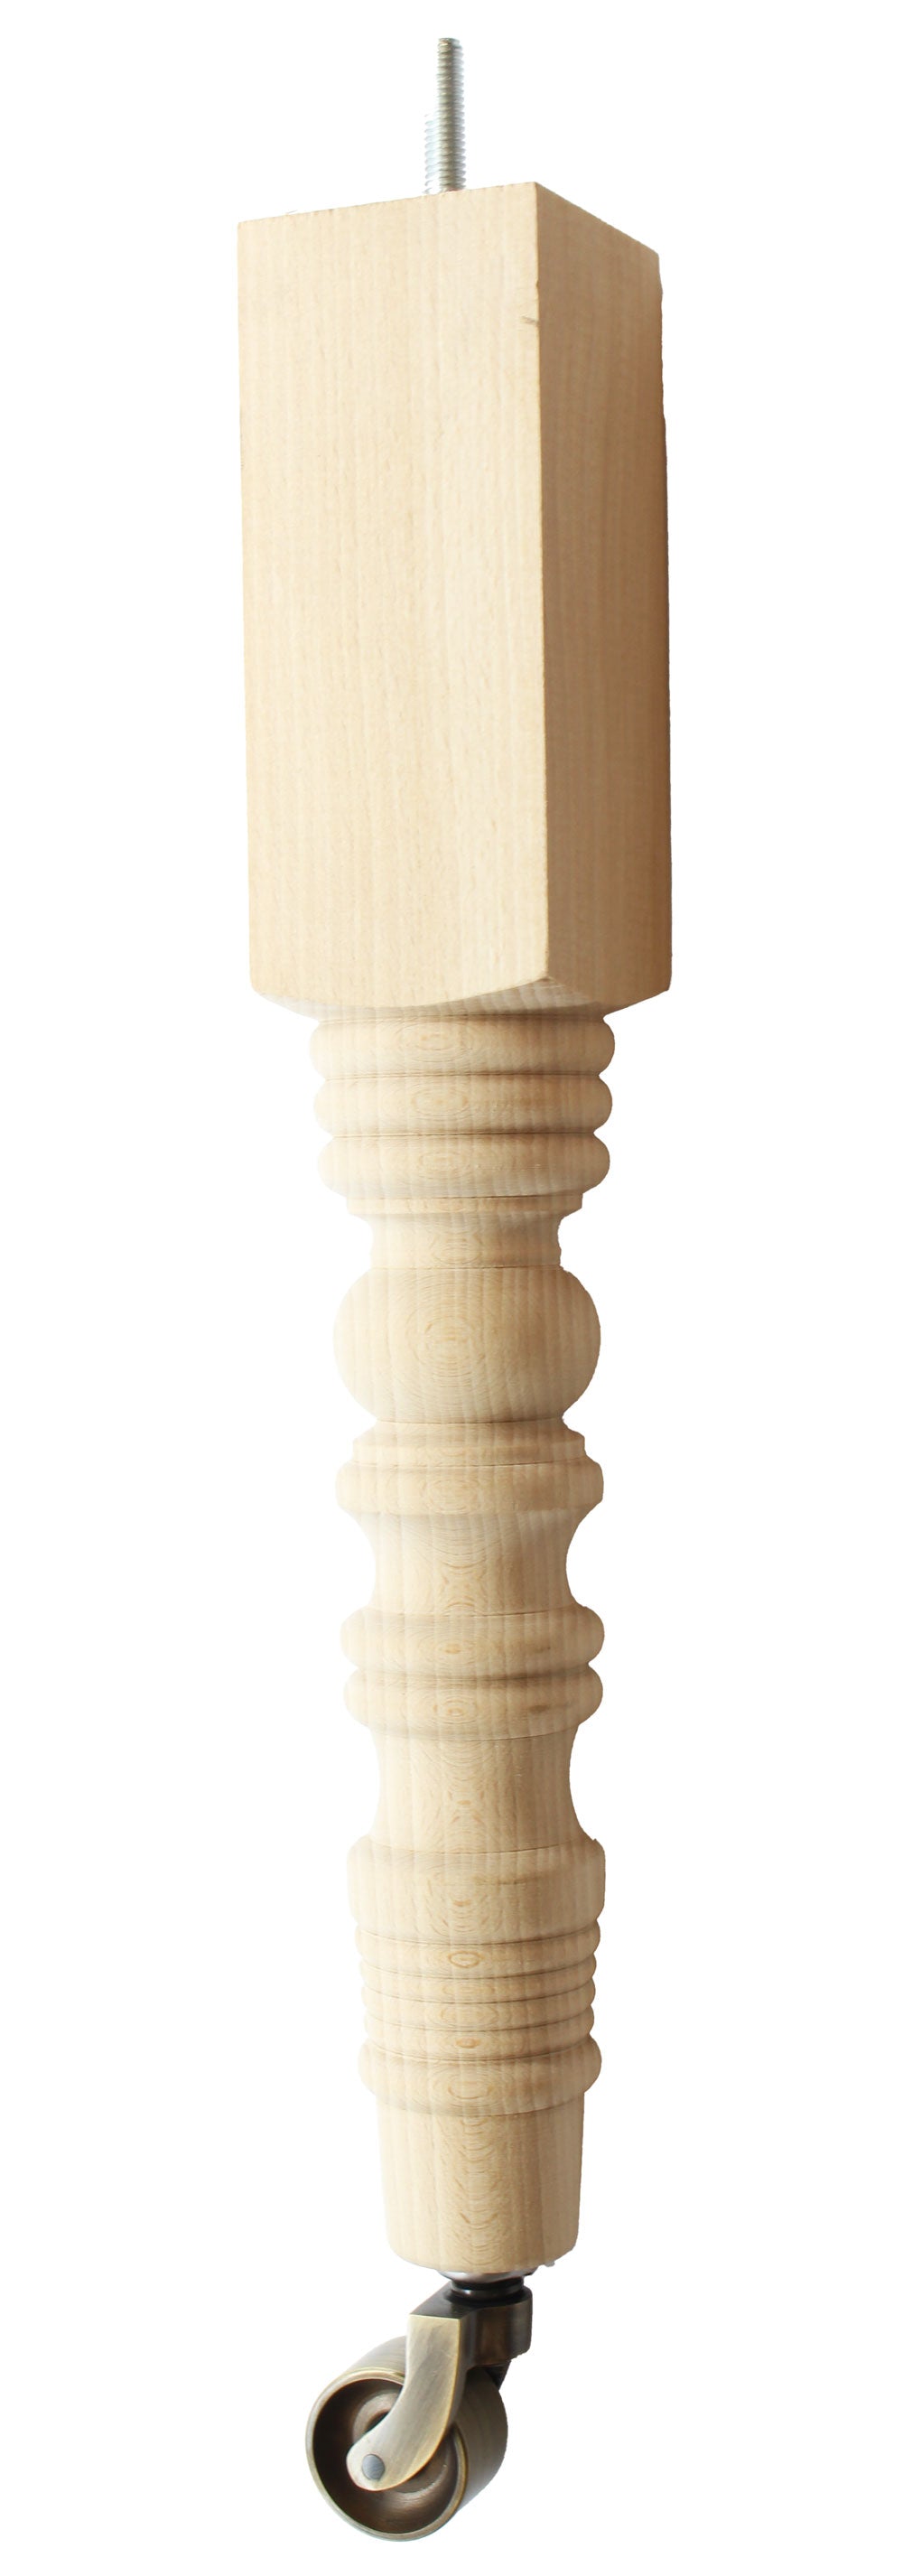 Lagrasse Detailed Wooden Furniture Legs with Grip Neck Castors